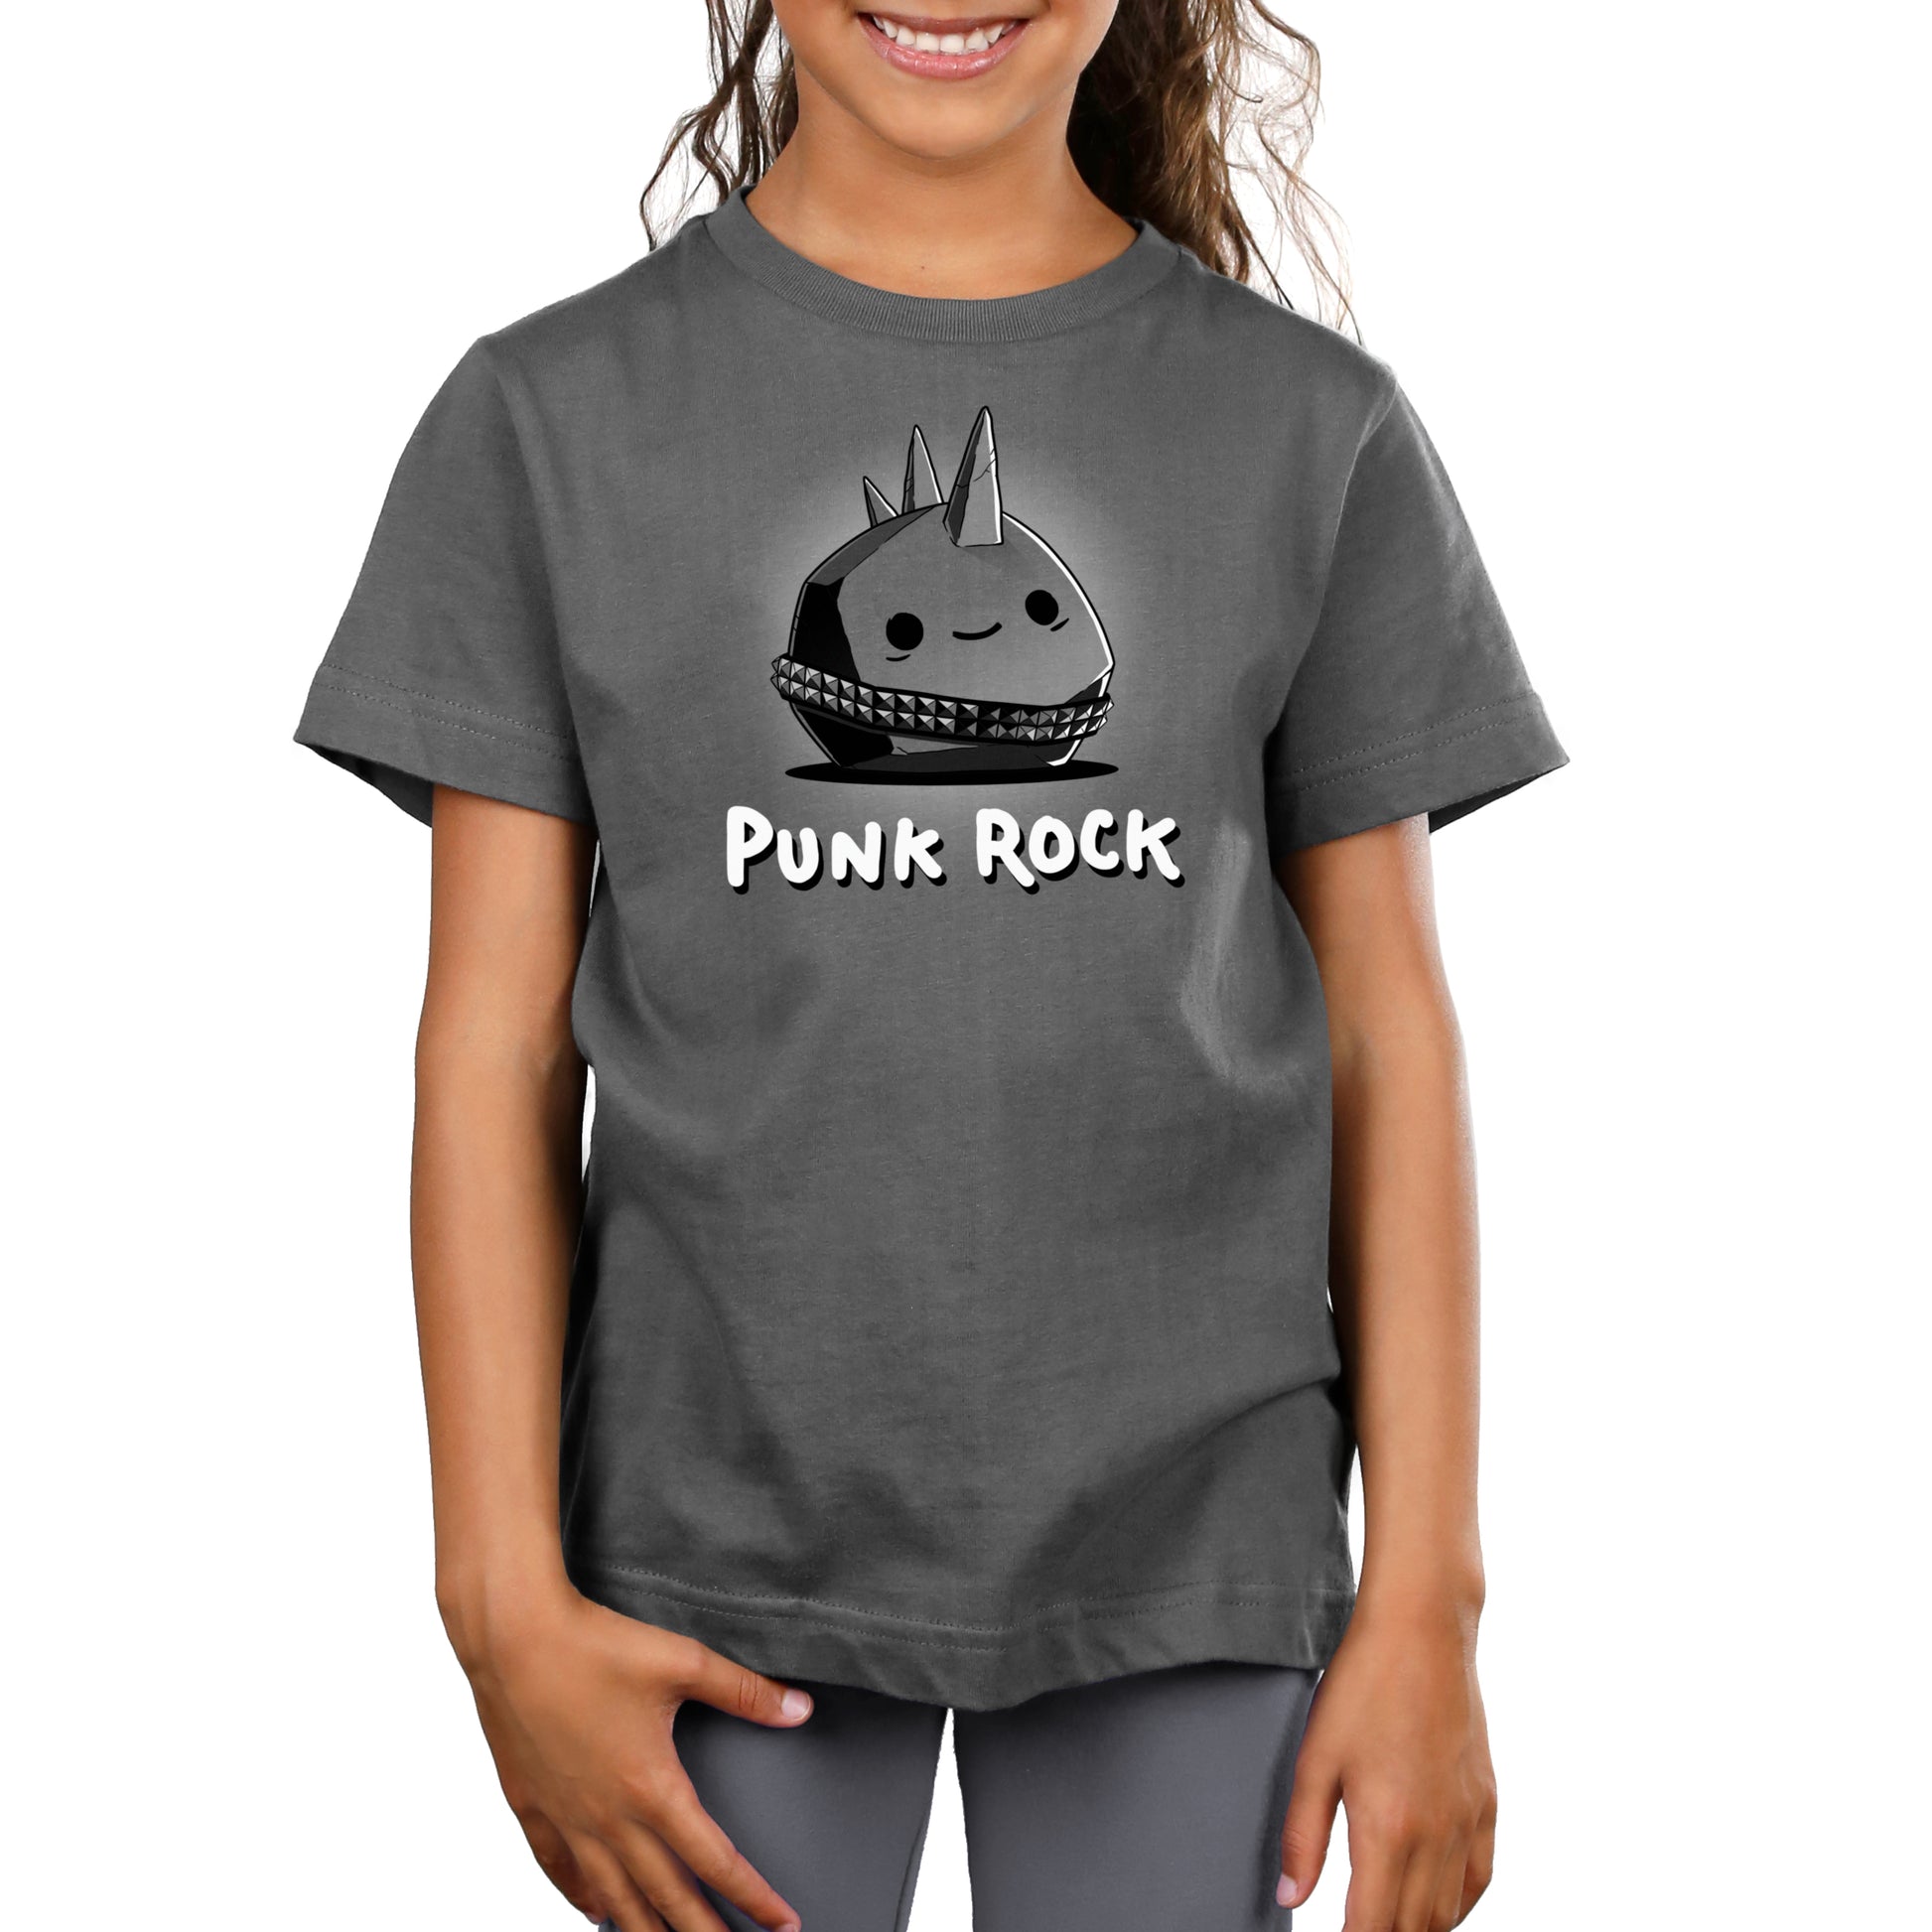 A girl wearing a TeeTurtle Punk Rock t-shirt.